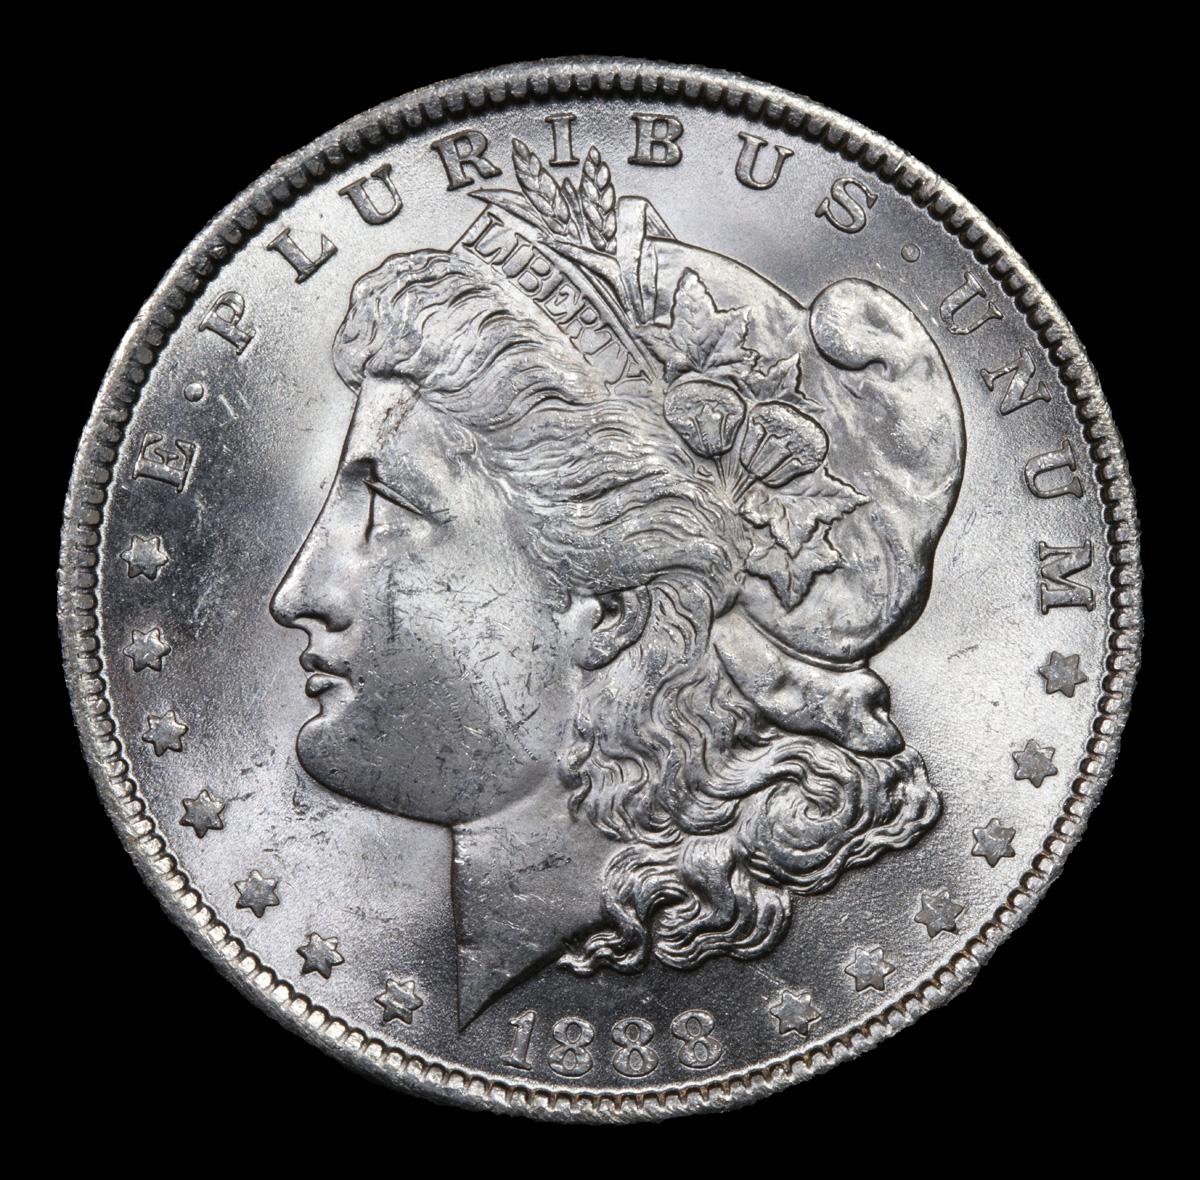 1888-p vam 29 R5 Morgan Dollar $1 Grades Select+ Unc